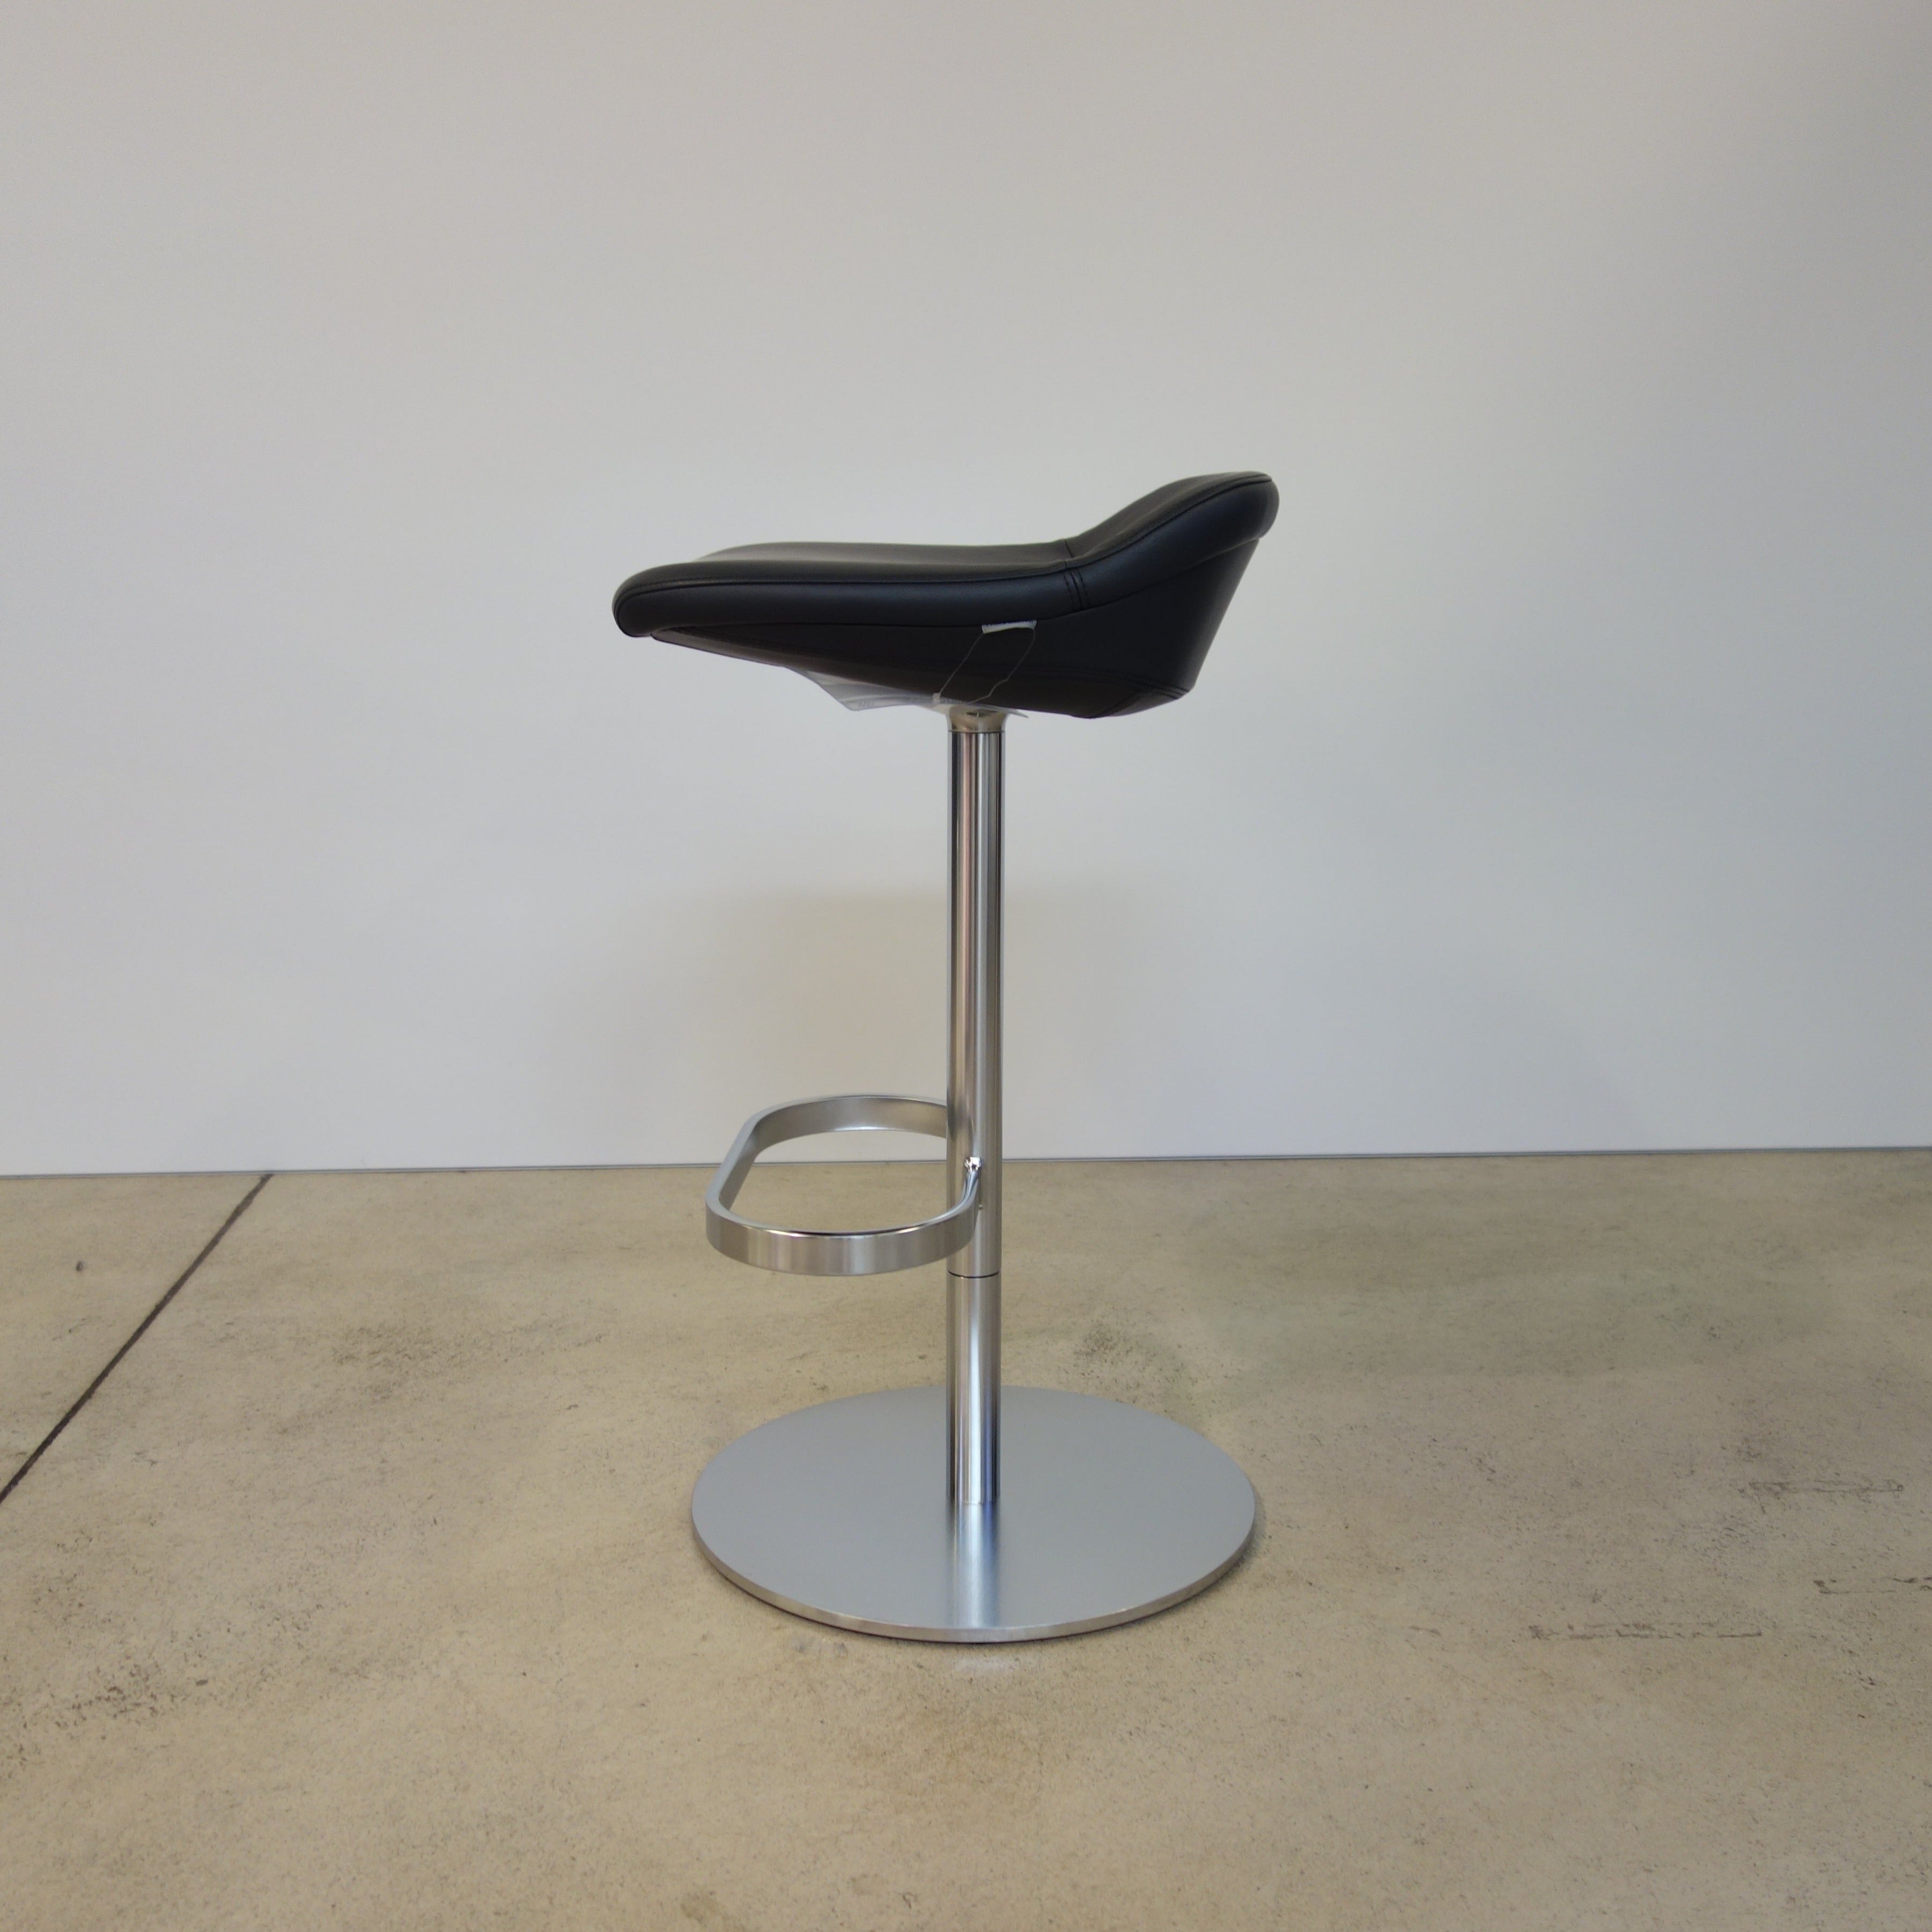 Walter Knoll / Turtle 1578 / bar stool